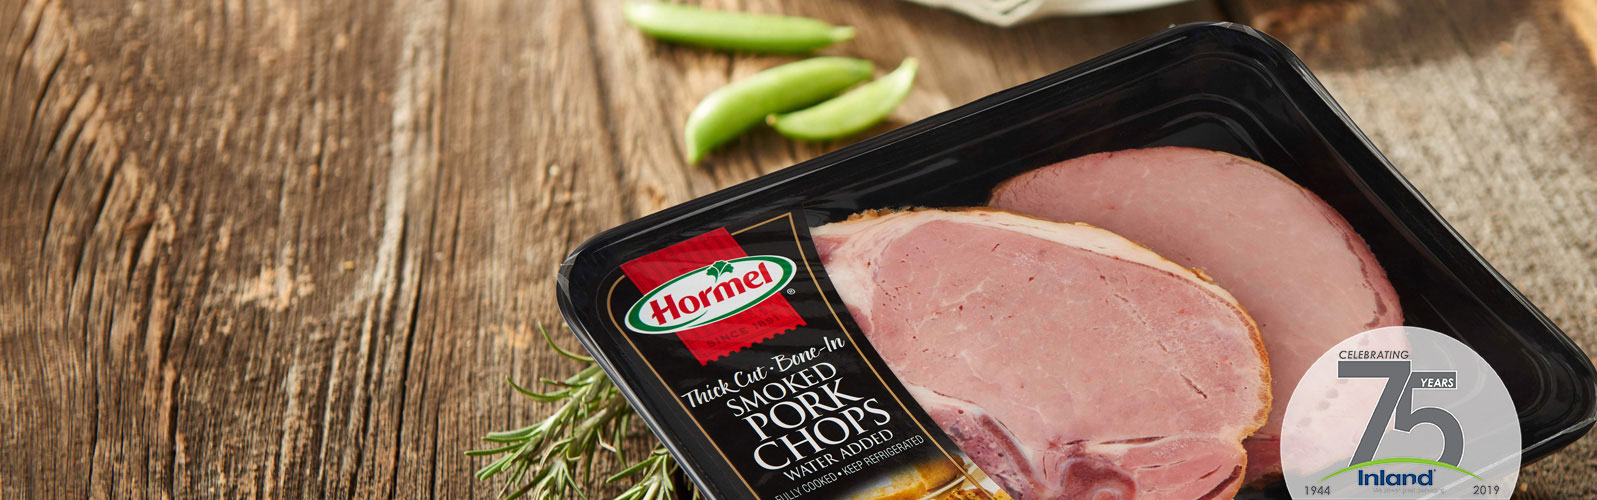 Hormel smoked pork chops pressure sensitive label by Inland